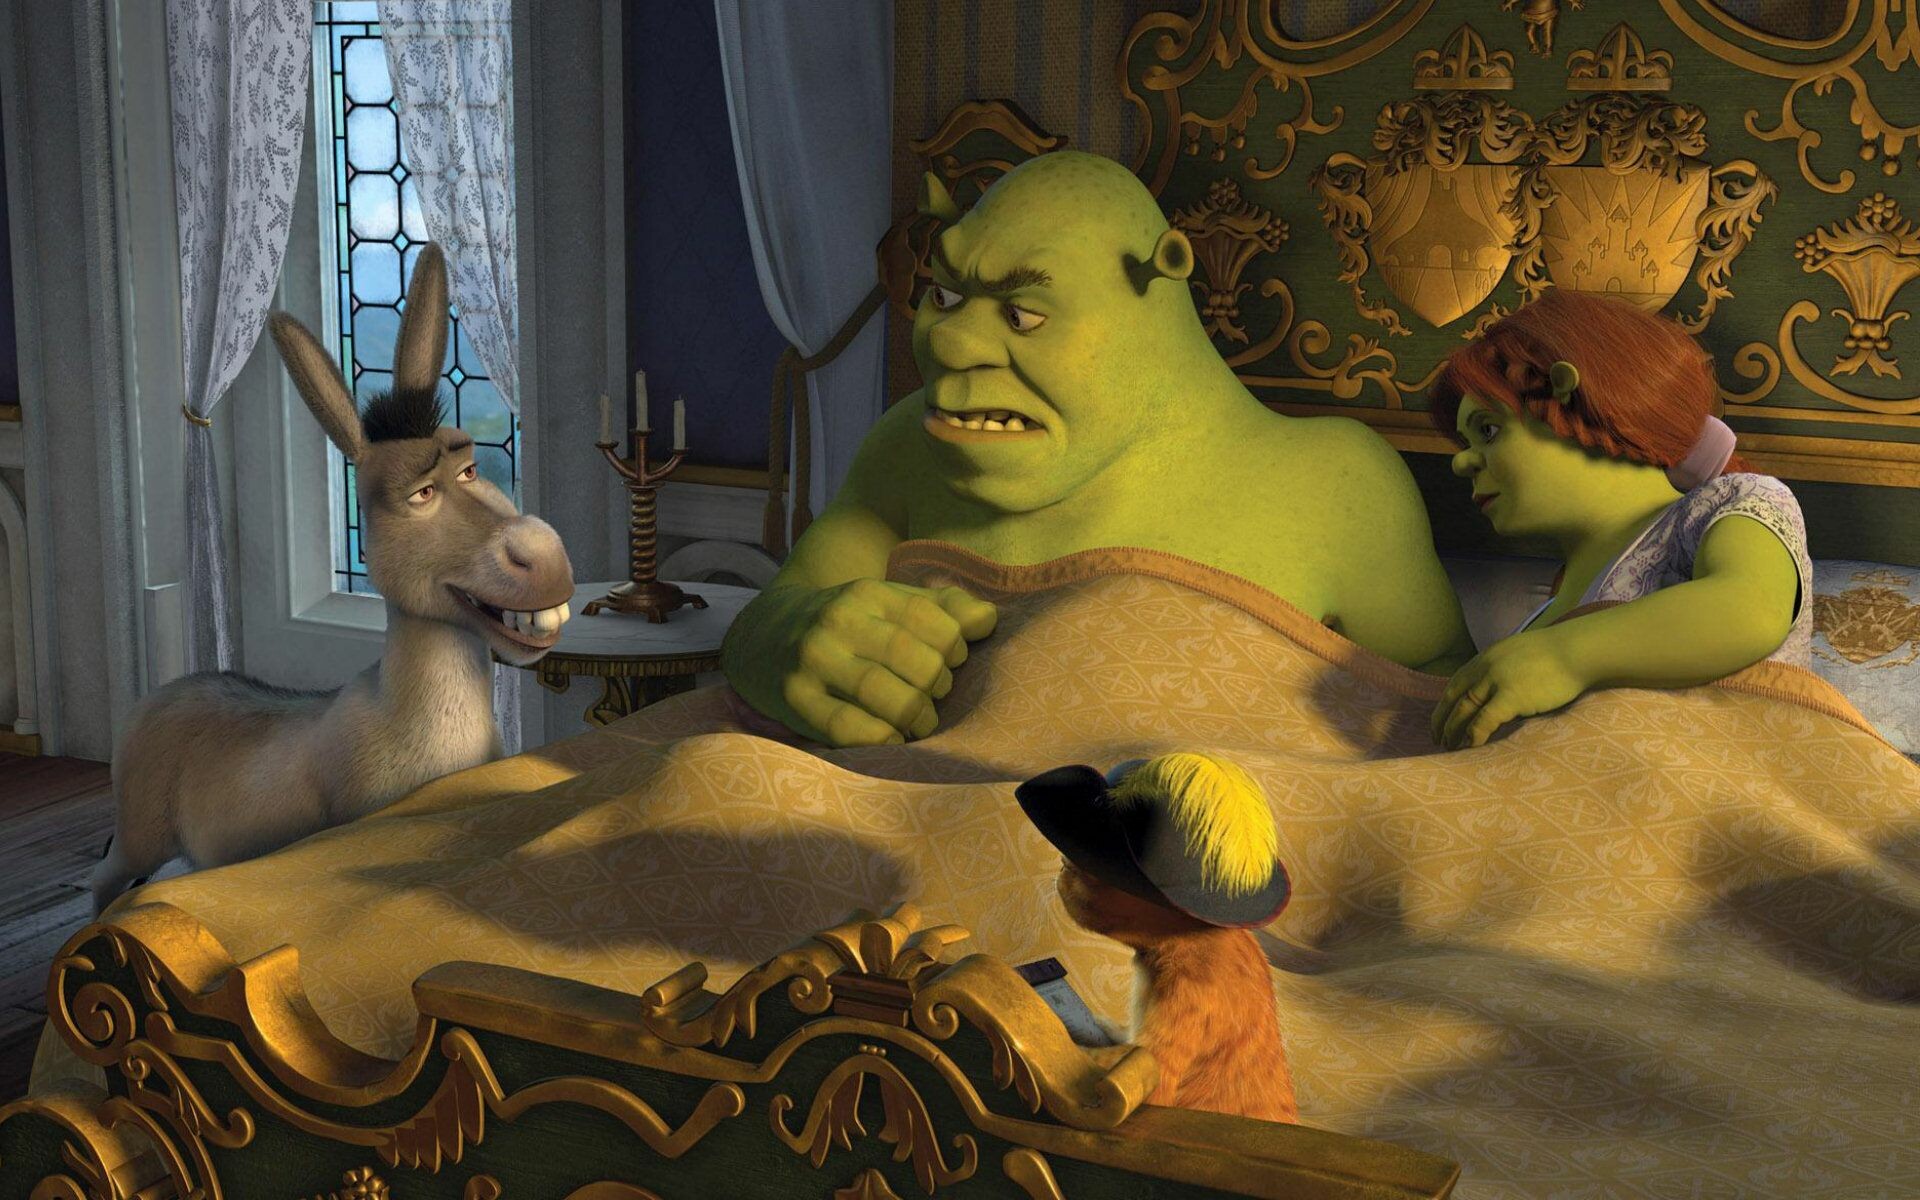 Shrek, Green ogre, Fairytale creature, Adorable wallpapers, 1920x1200 HD Desktop